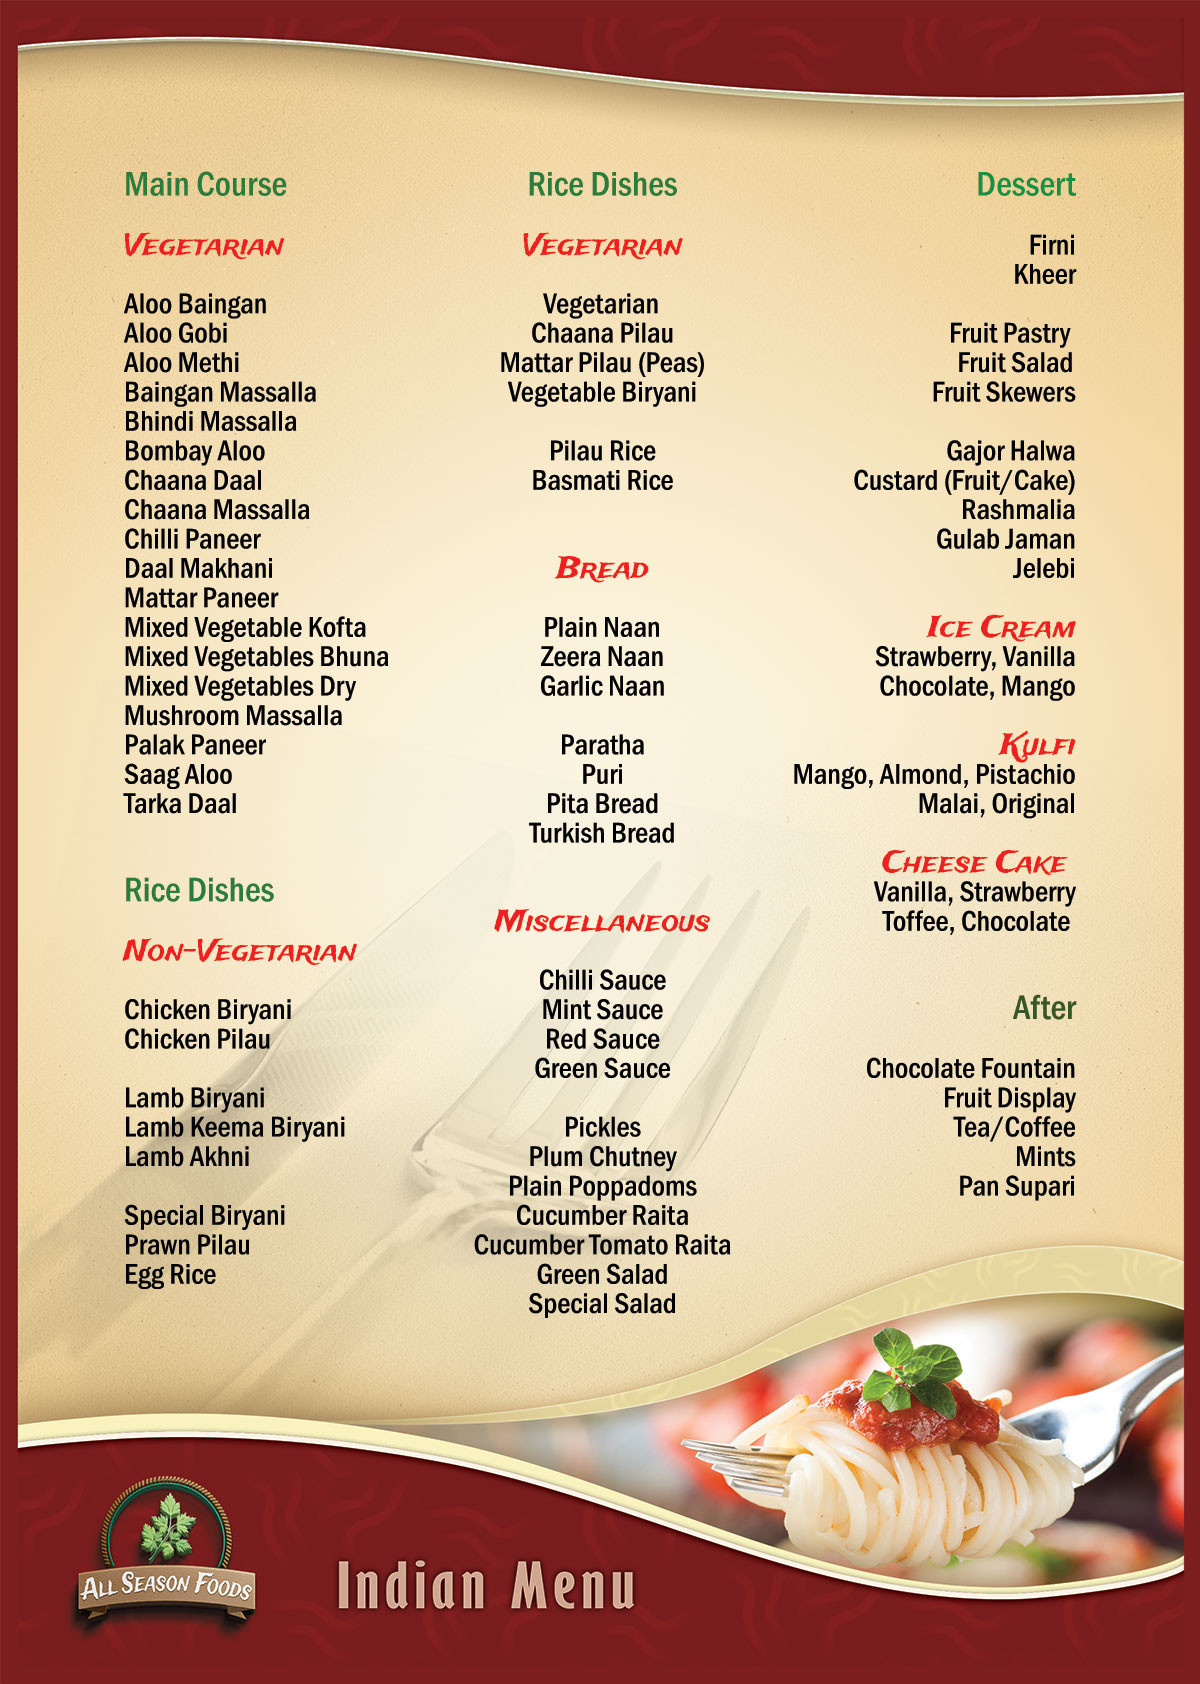 Indian Dinner Menu Ideas
 Food menu all season foods halal catering sandwich wedding